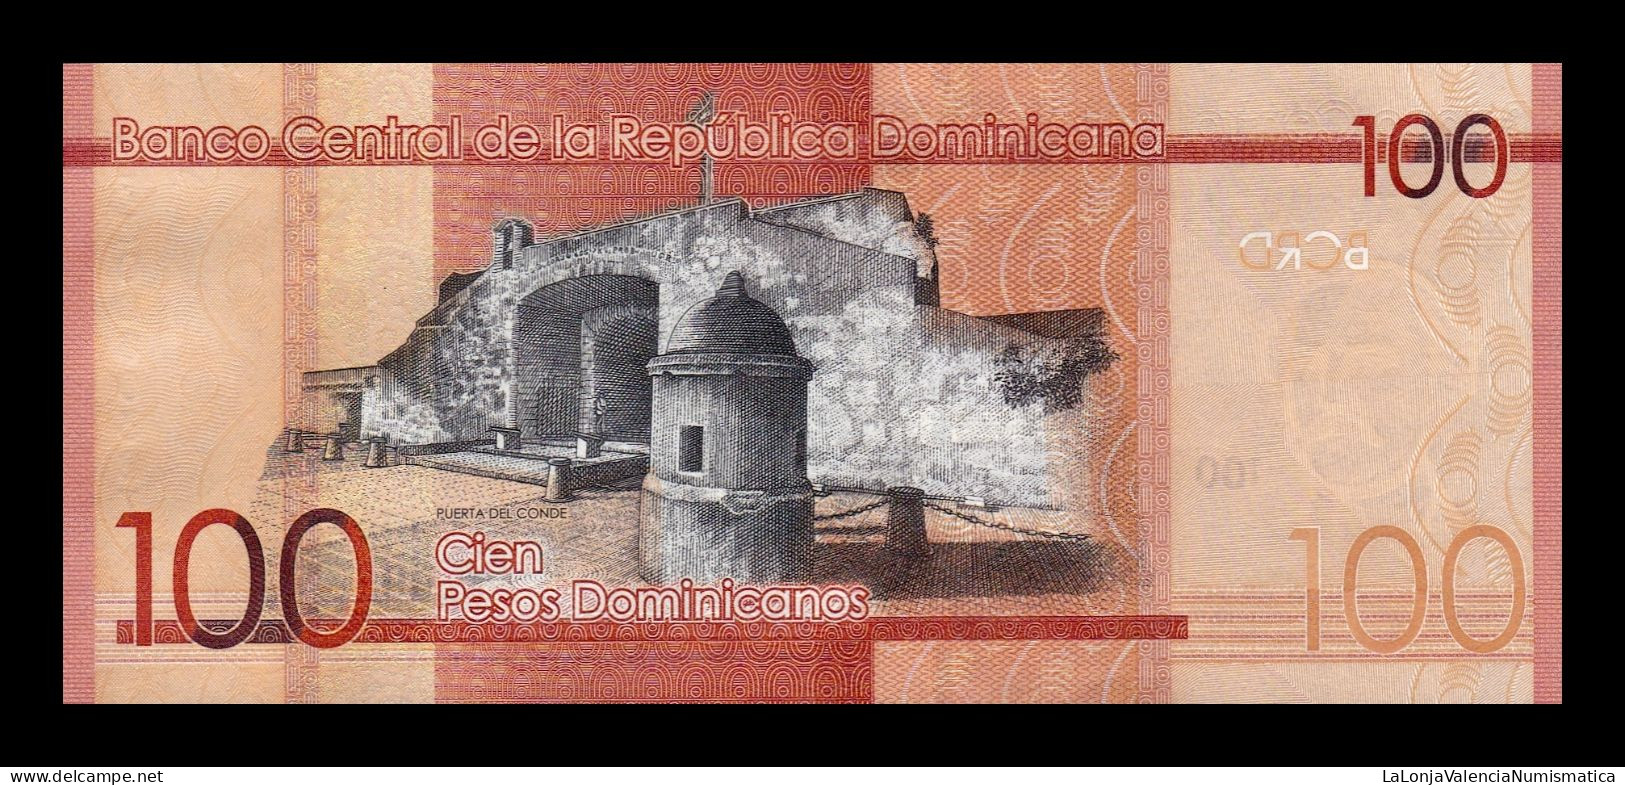 República Dominicana 100 Pesos Dominicanos 2016 Pick 190c Low Serial 596 Sc Unc - República Dominicana